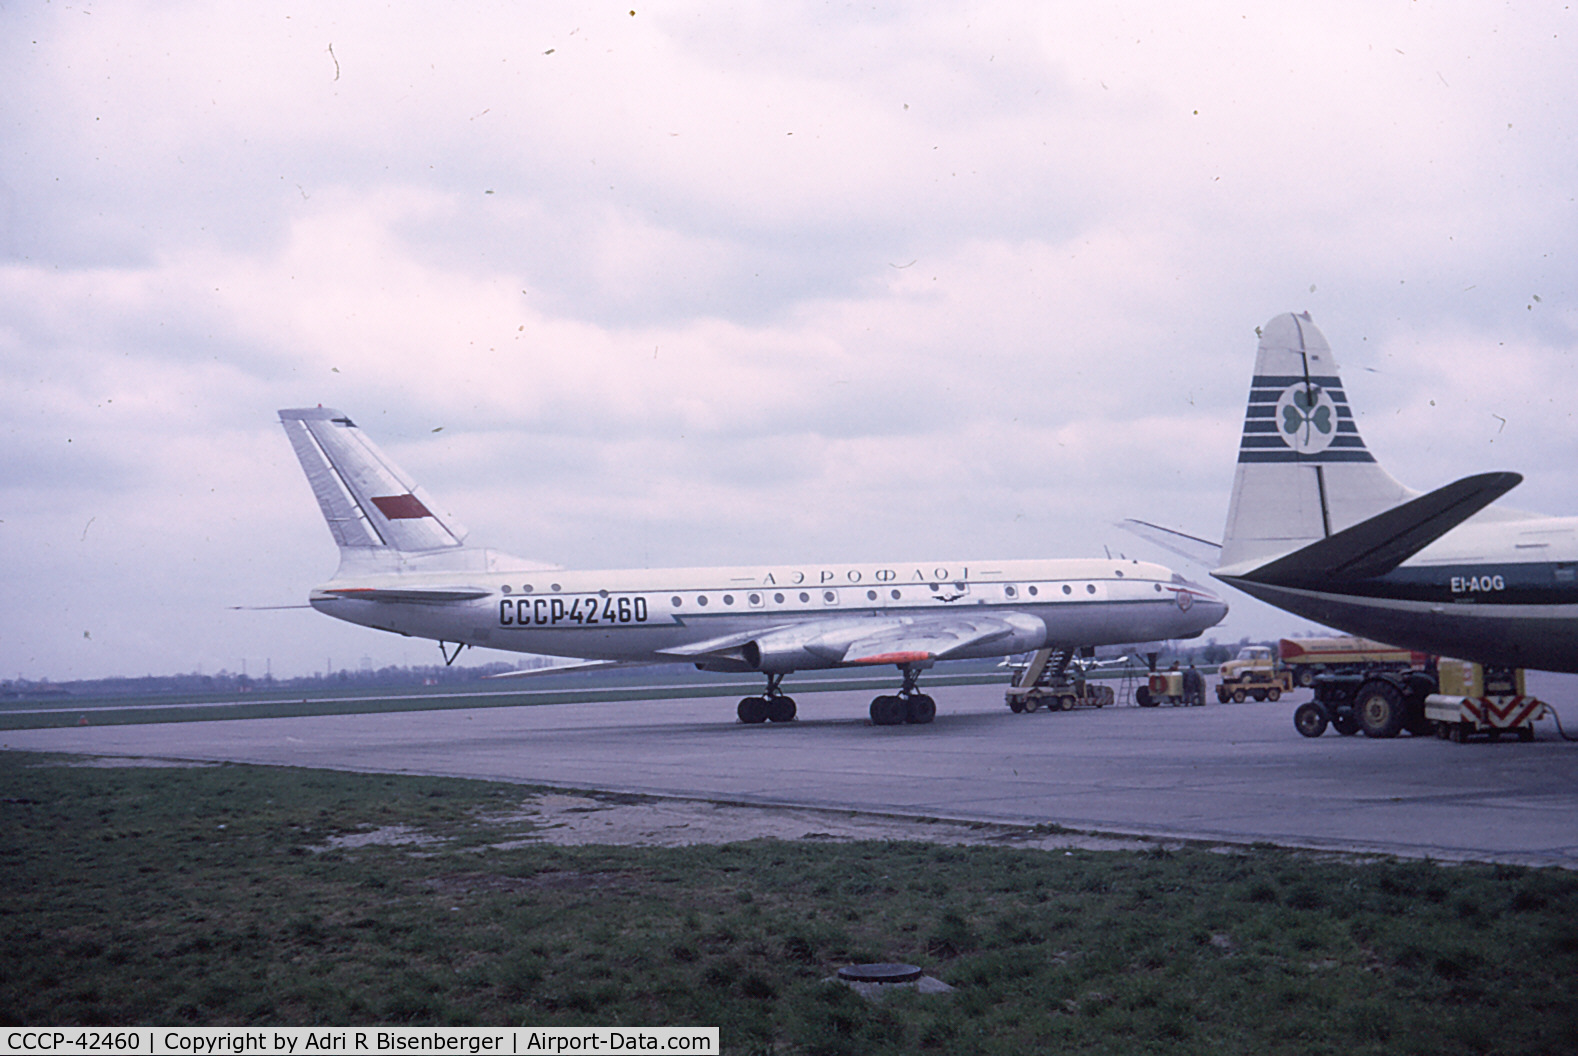 CCCP-42460, 1960 Tupolev Tu-104A C/N 06601902, Schiphol Airport (EHAM), Amsterdam, The Netherlands - 1969